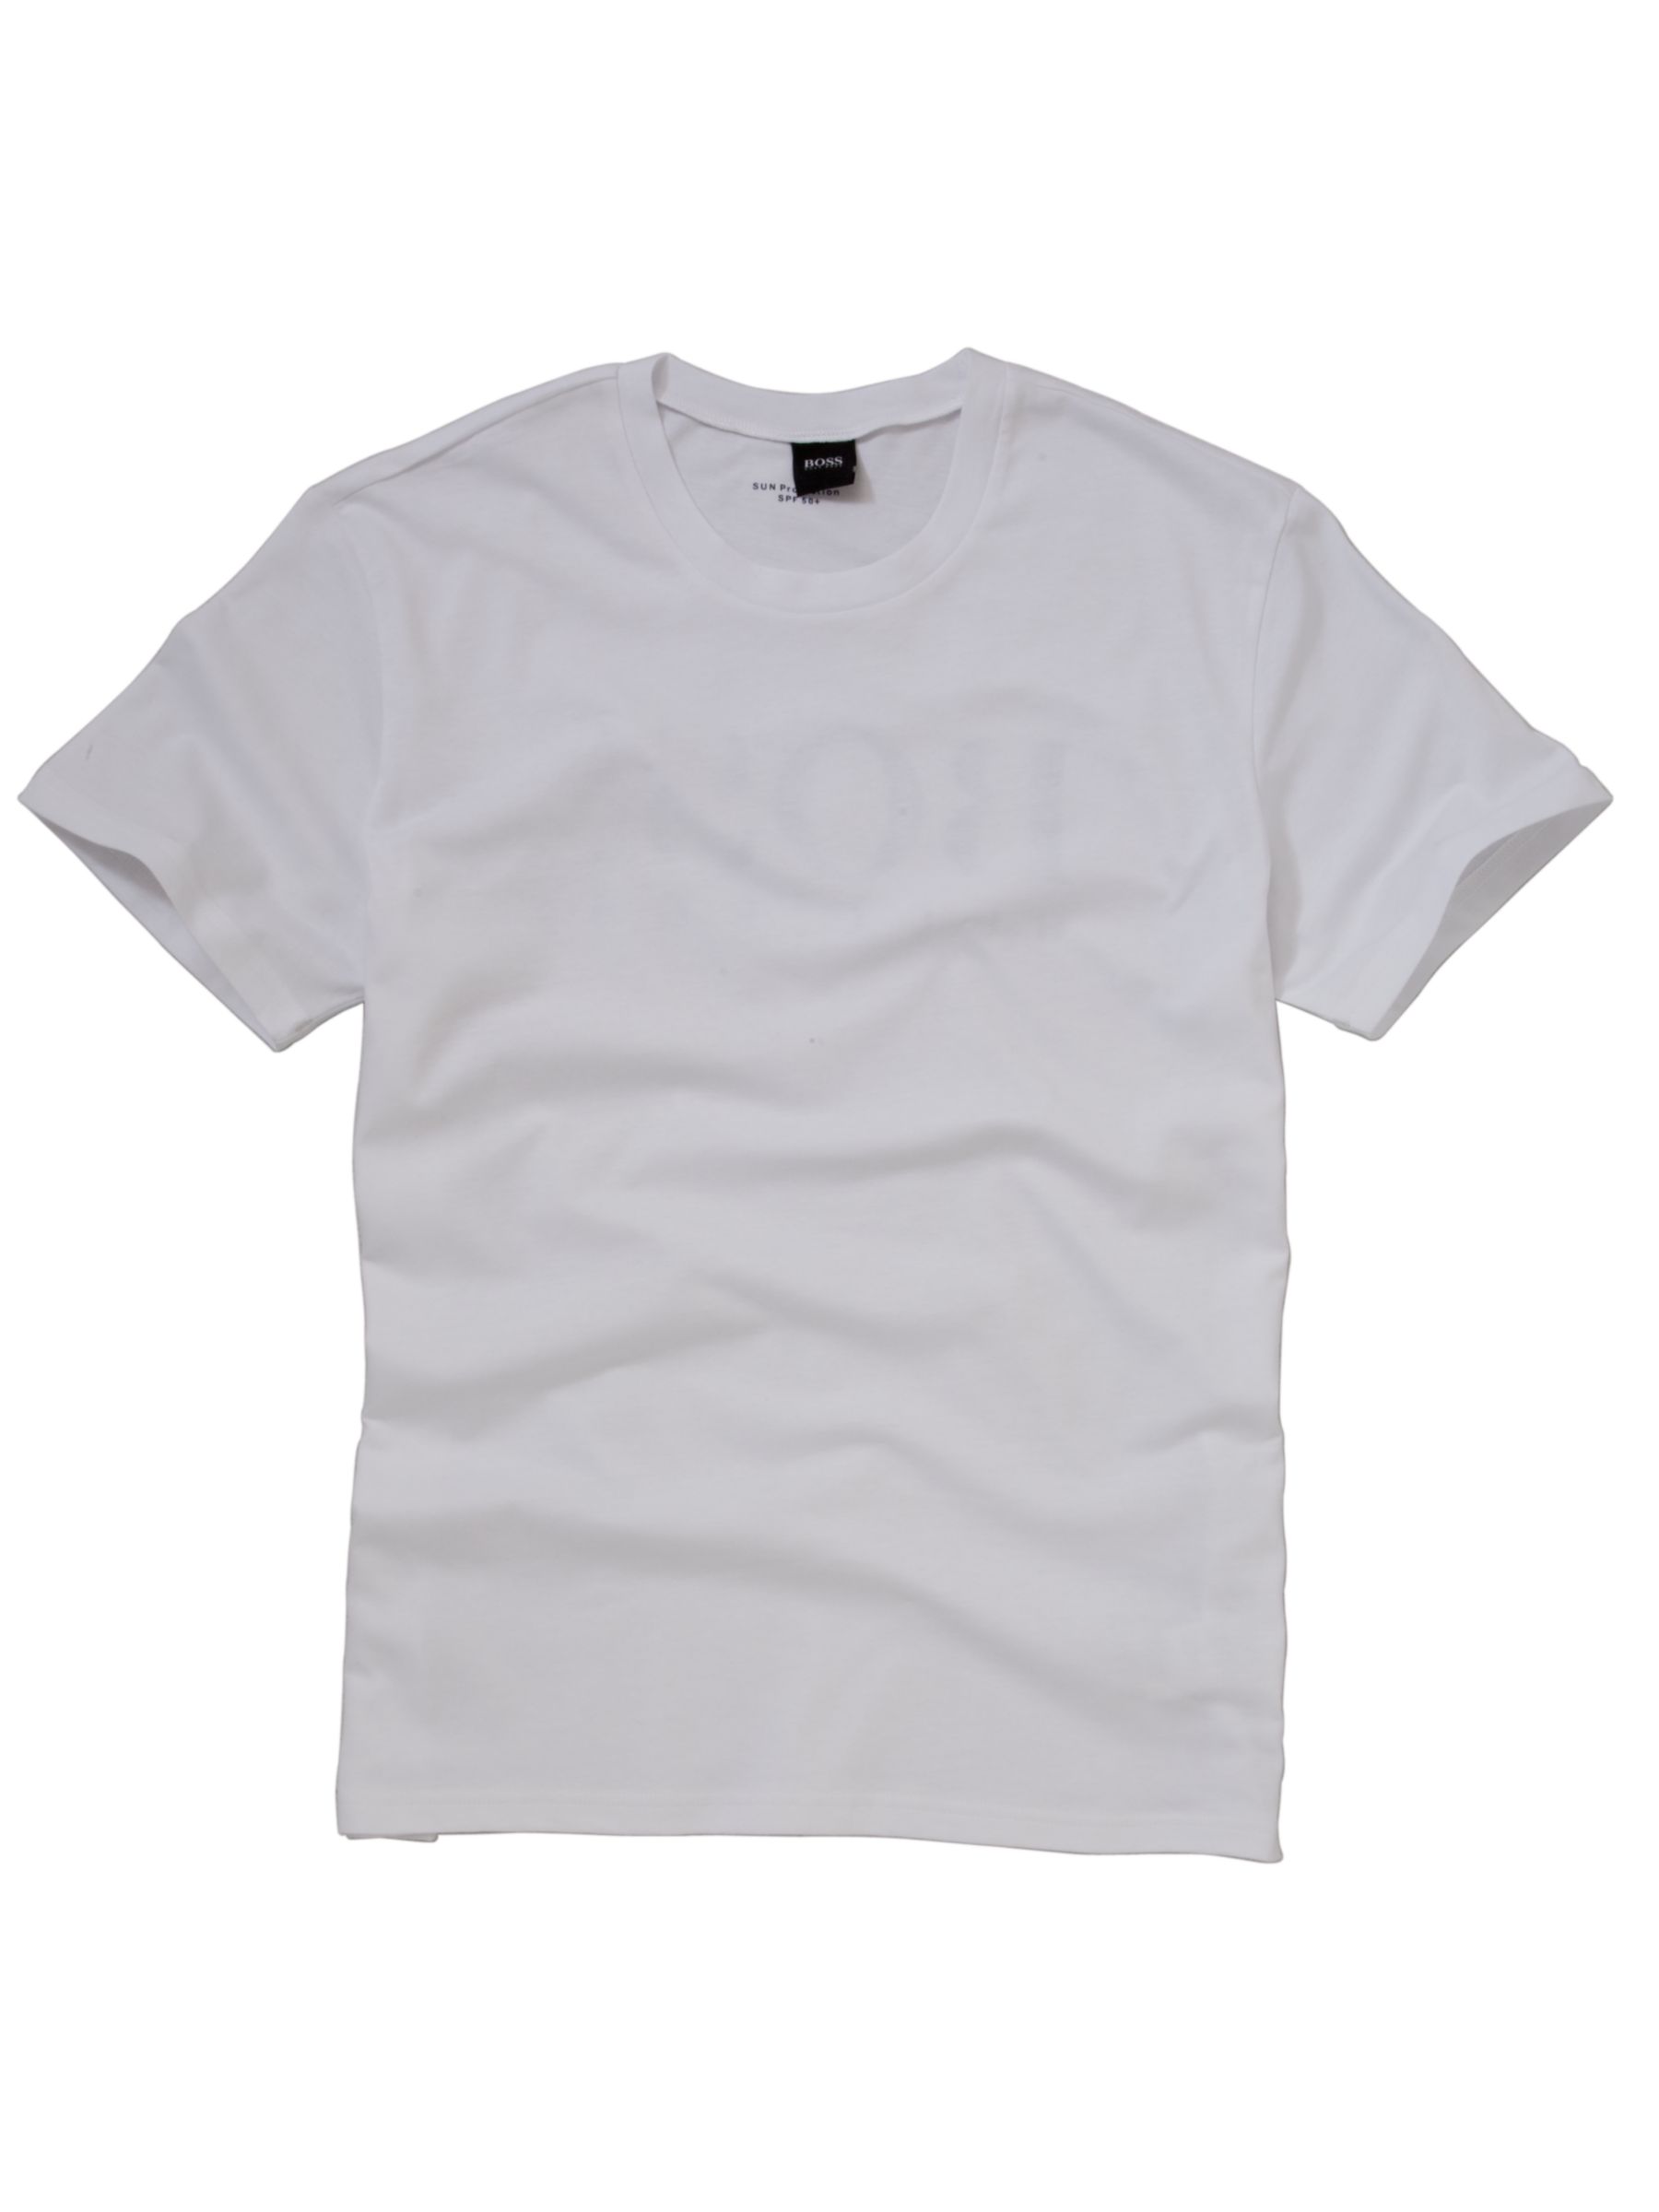 Hugo Boss Beach Logo T-Shirt, White